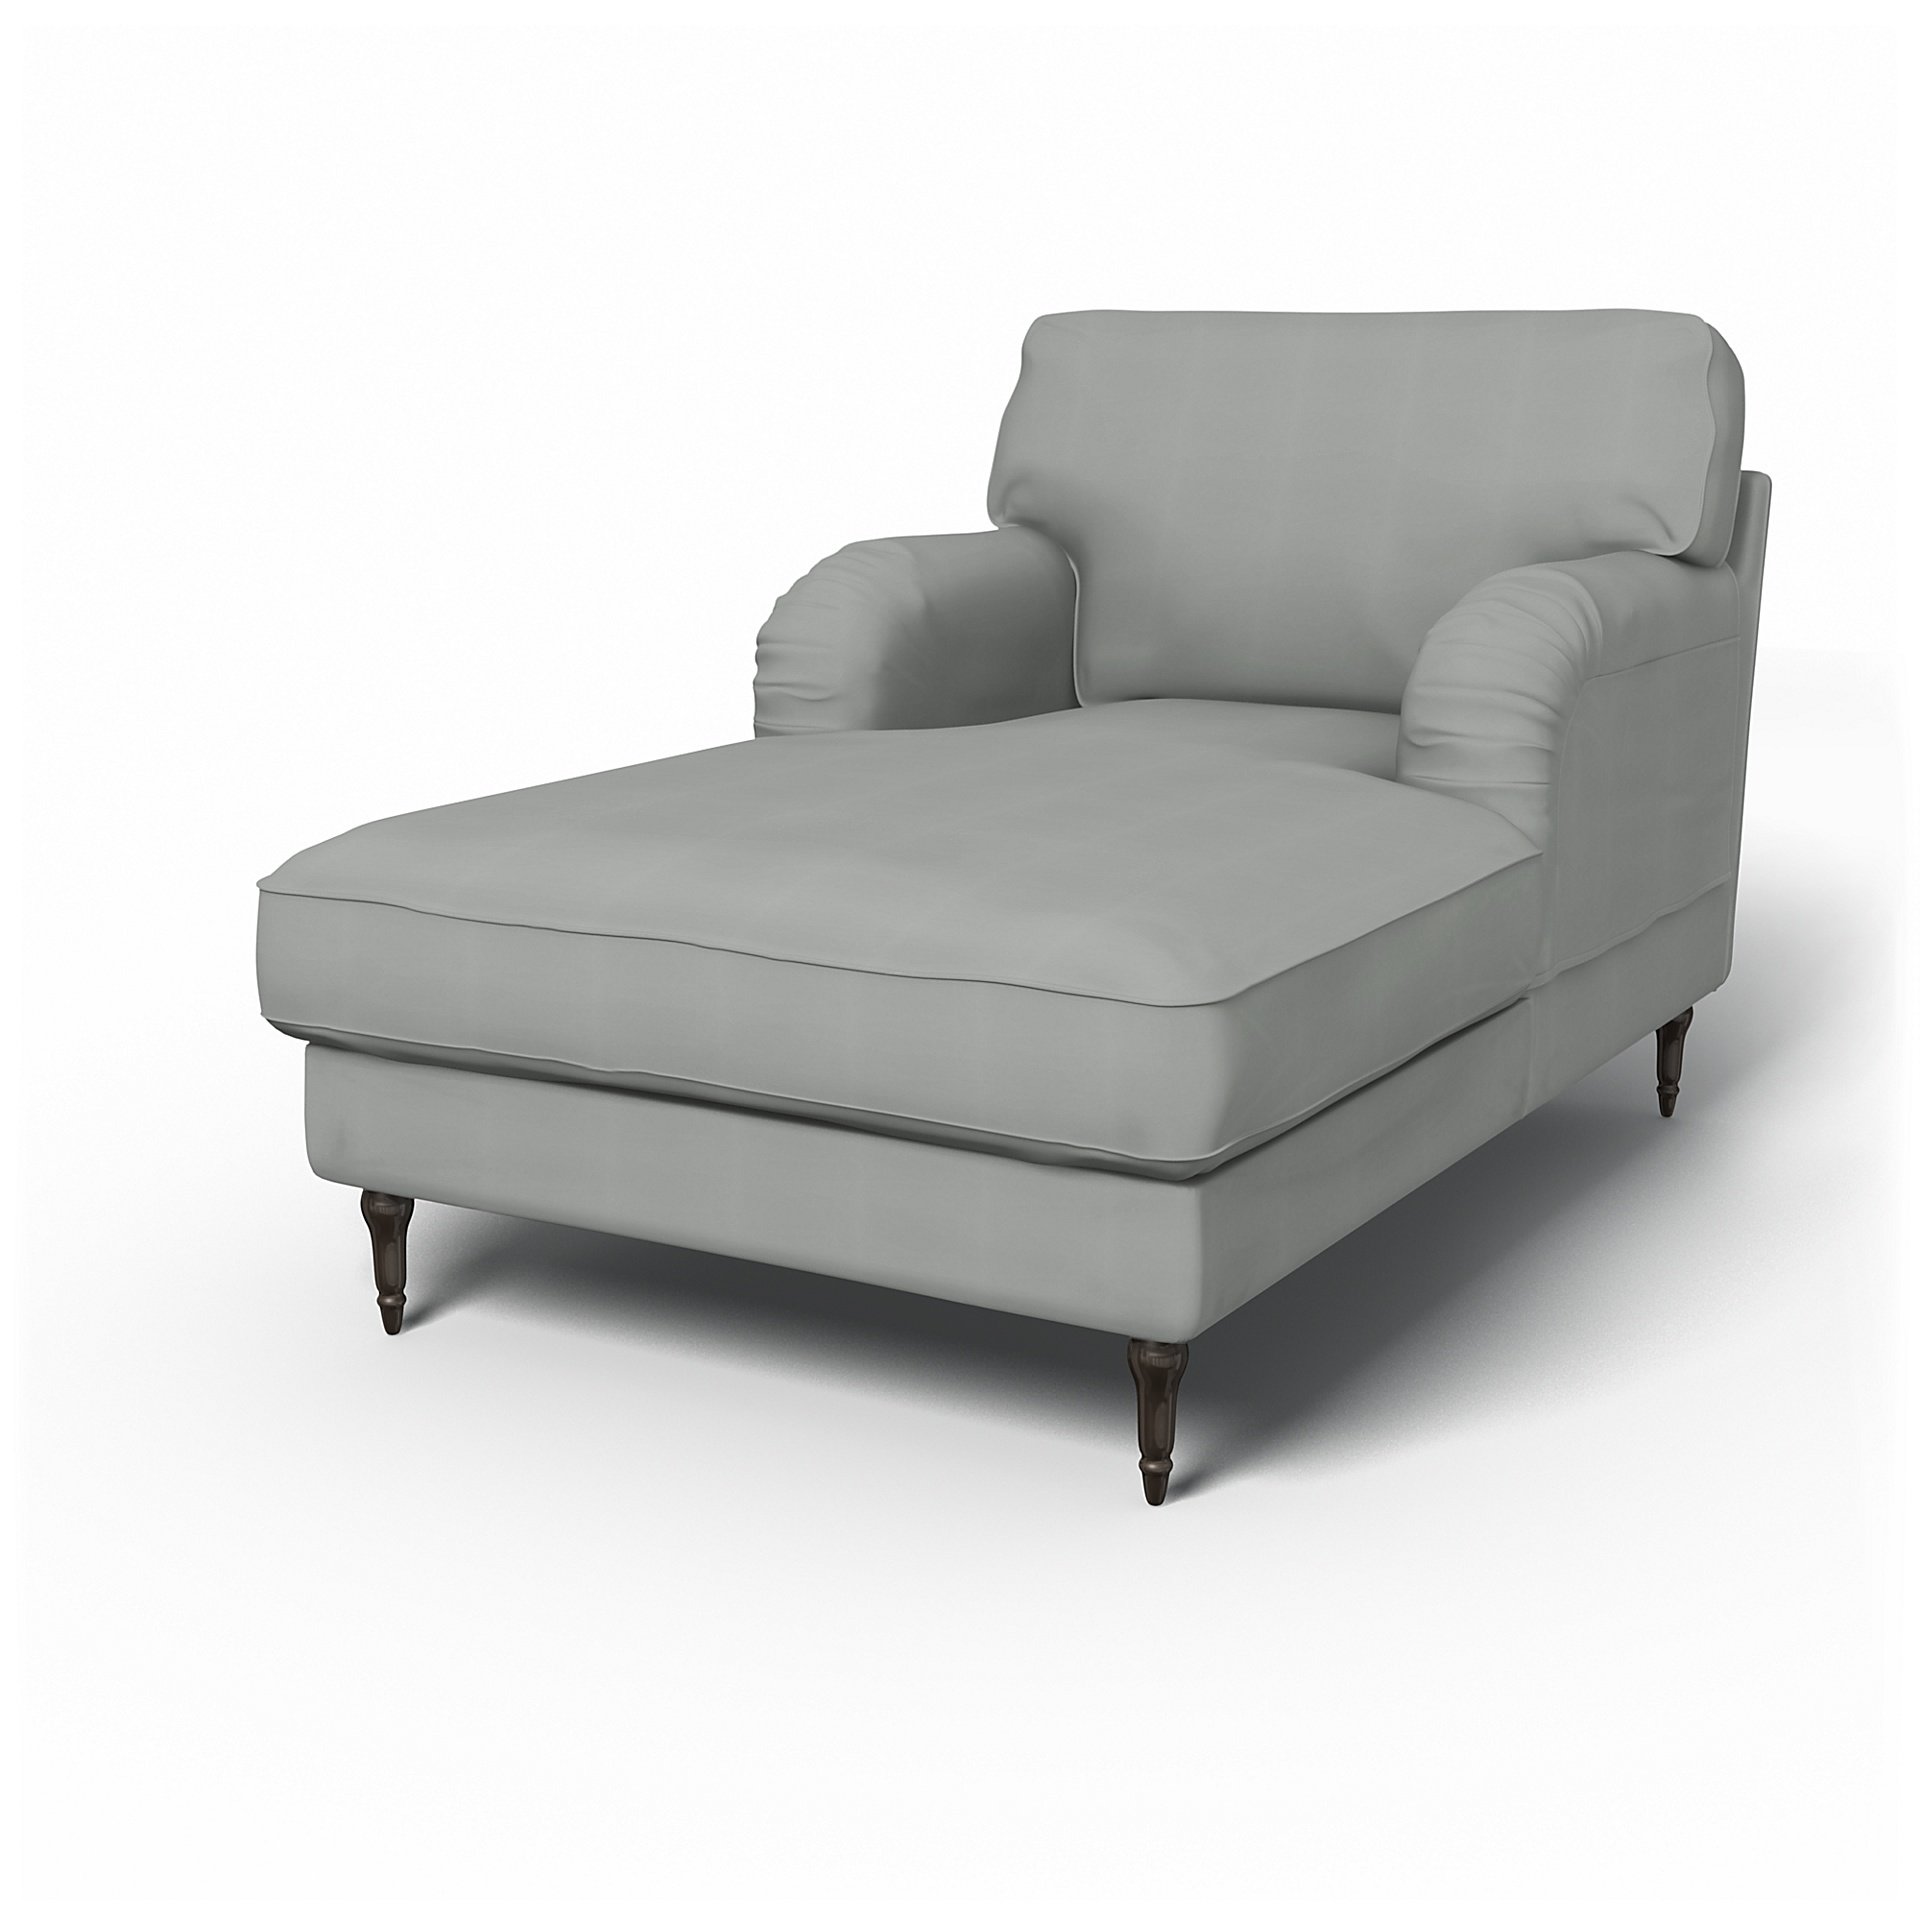 IKEA - Stocksund Chaise Longue Cover, Silver Grey, Cotton - Bemz